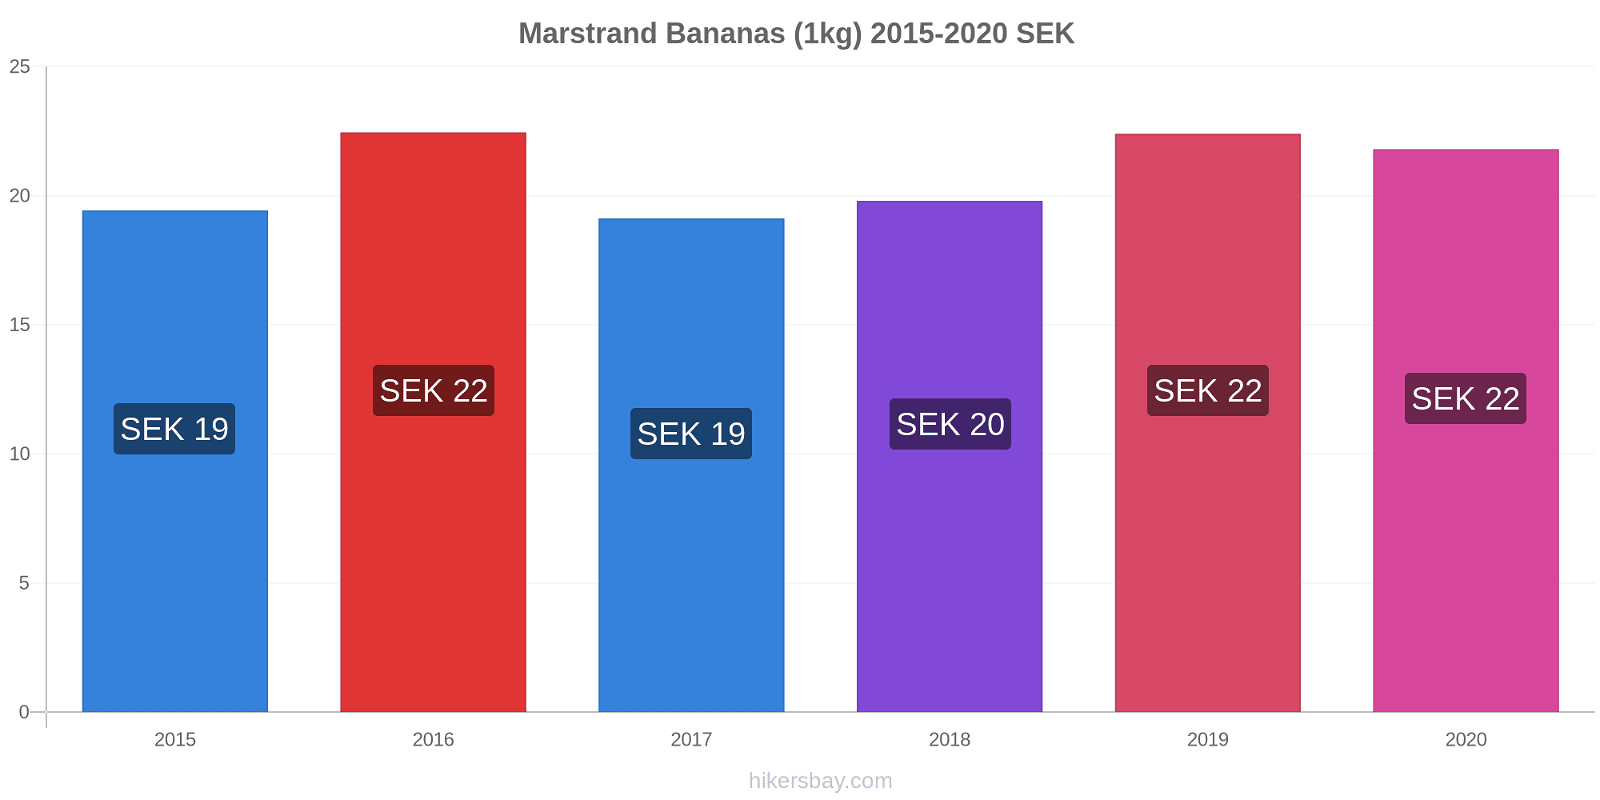 Marstrand price changes Bananas (1kg) hikersbay.com